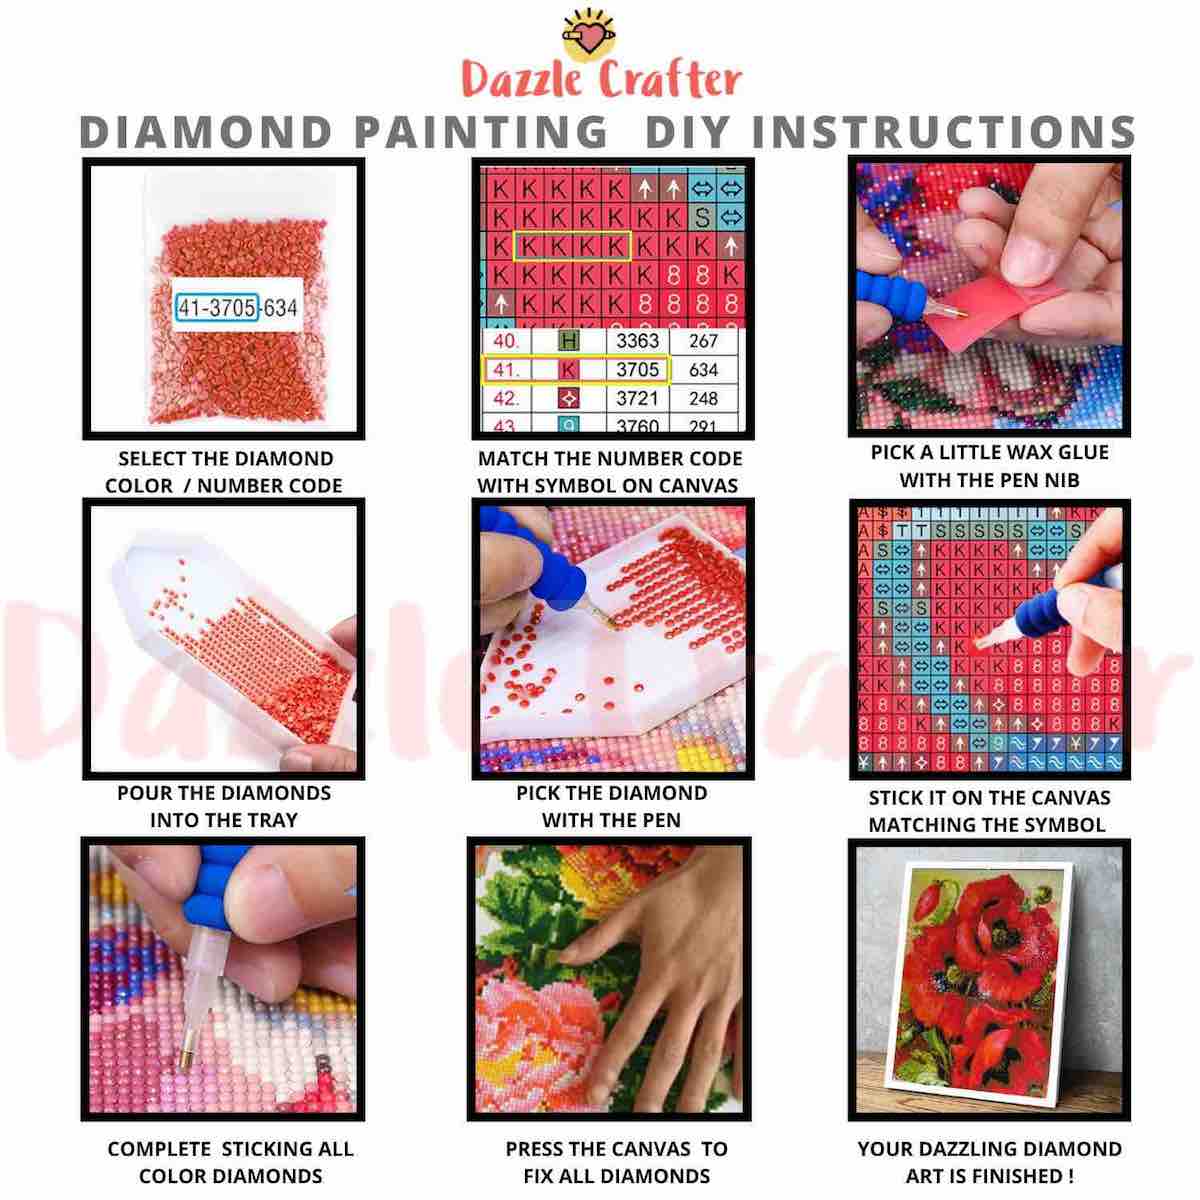 RAINBOW SHELL Diamond Painting Kit - DAZZLE CRAFTER